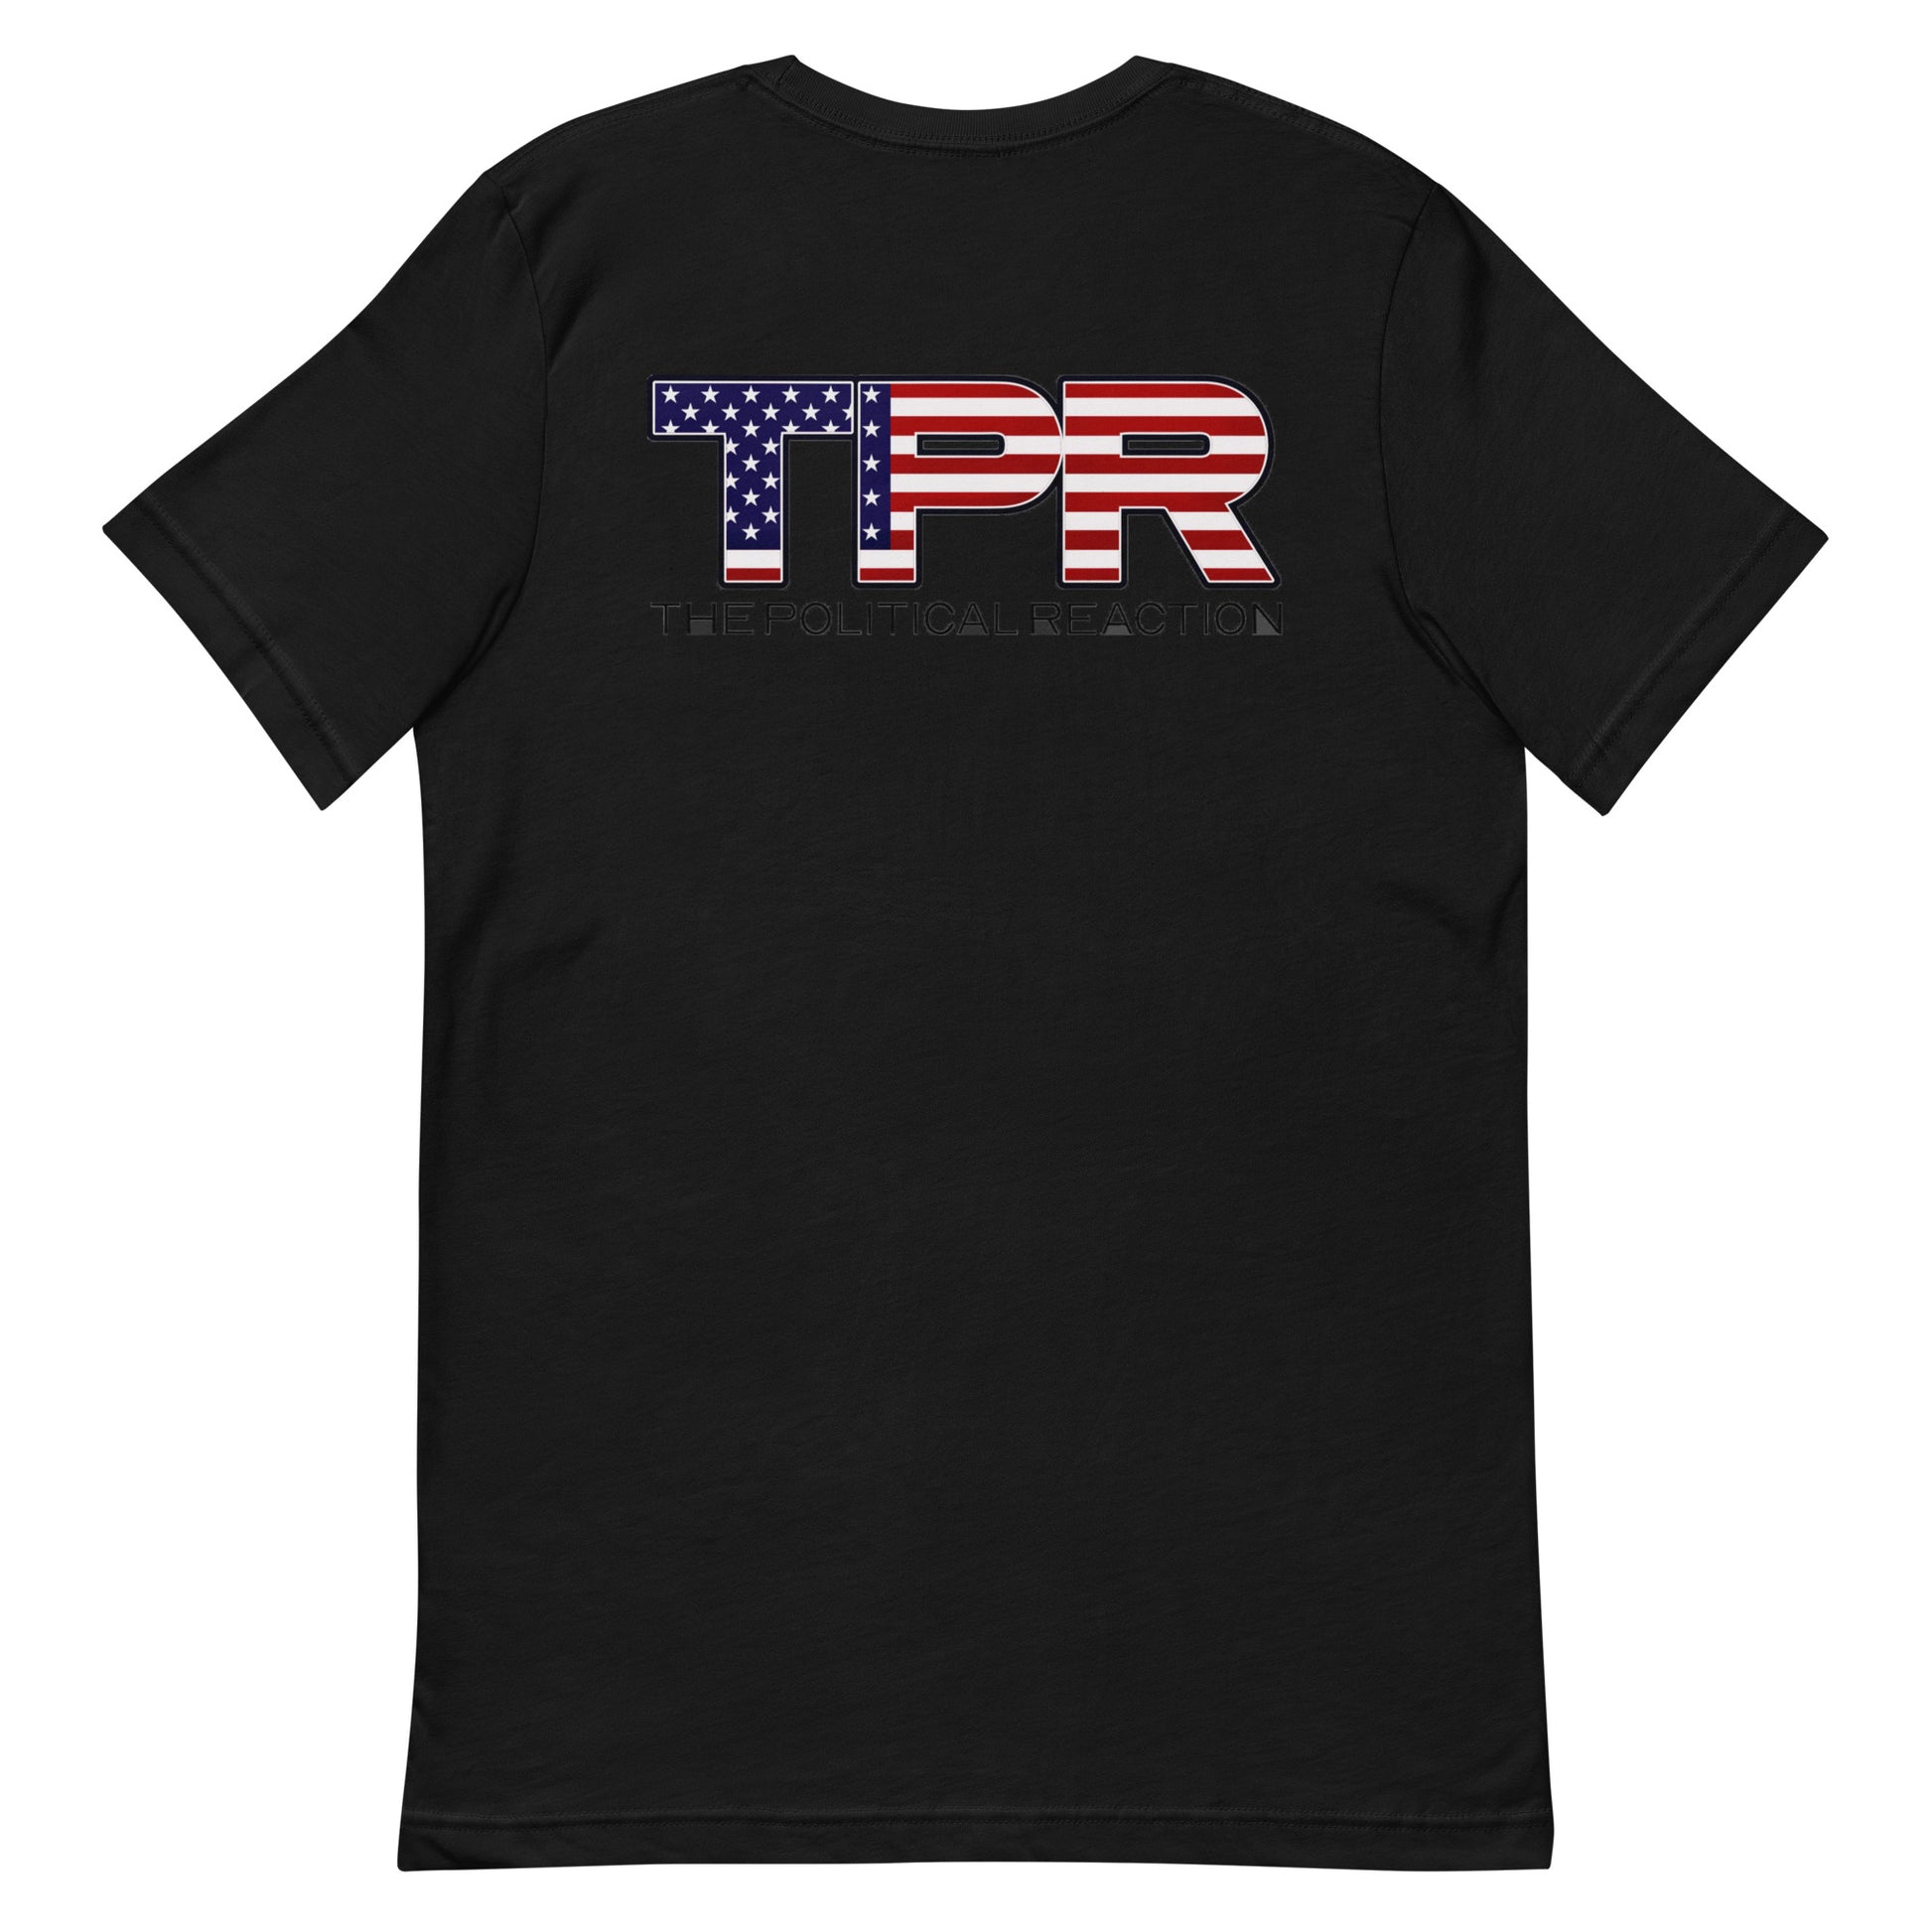 American-flag-edition-unisex-t-shirt-Black-back